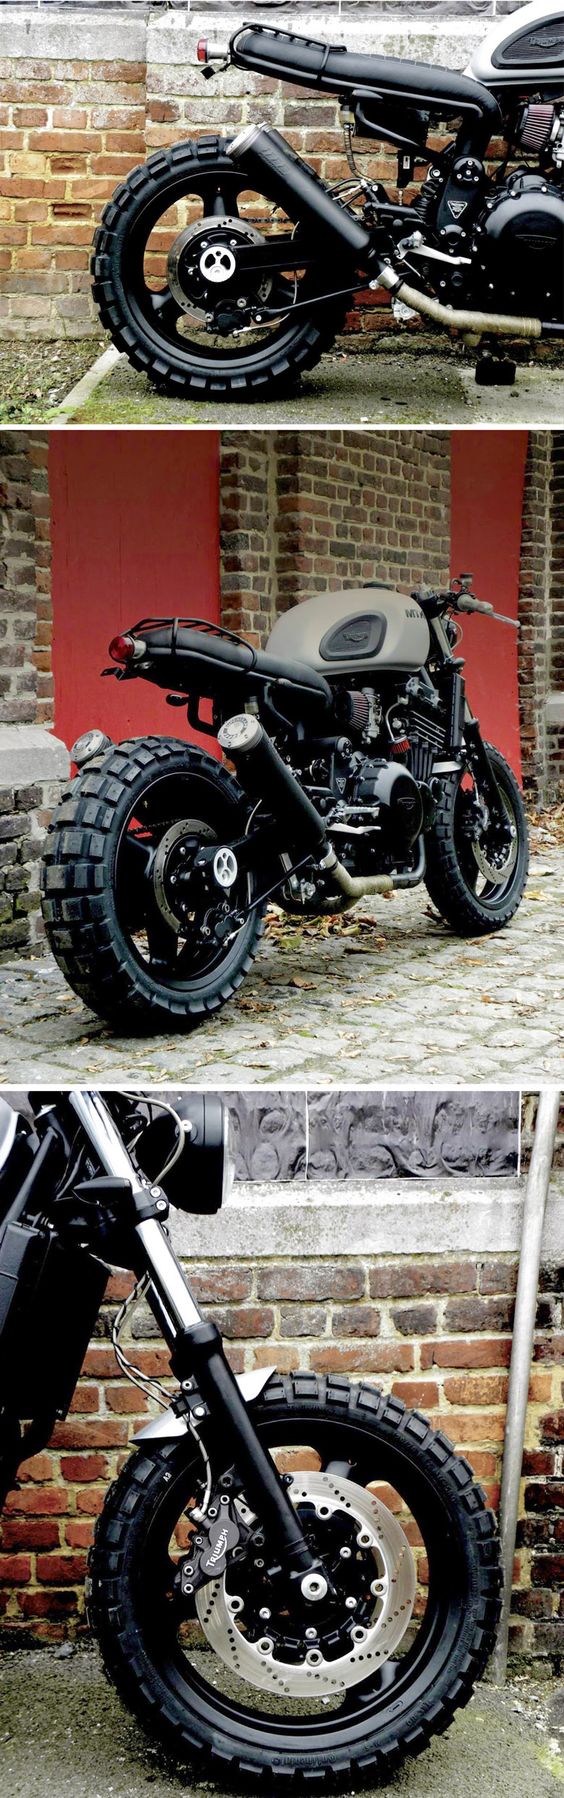 MK20 - Triumph by MotoKouture Bespoke Motorcycles.  |   